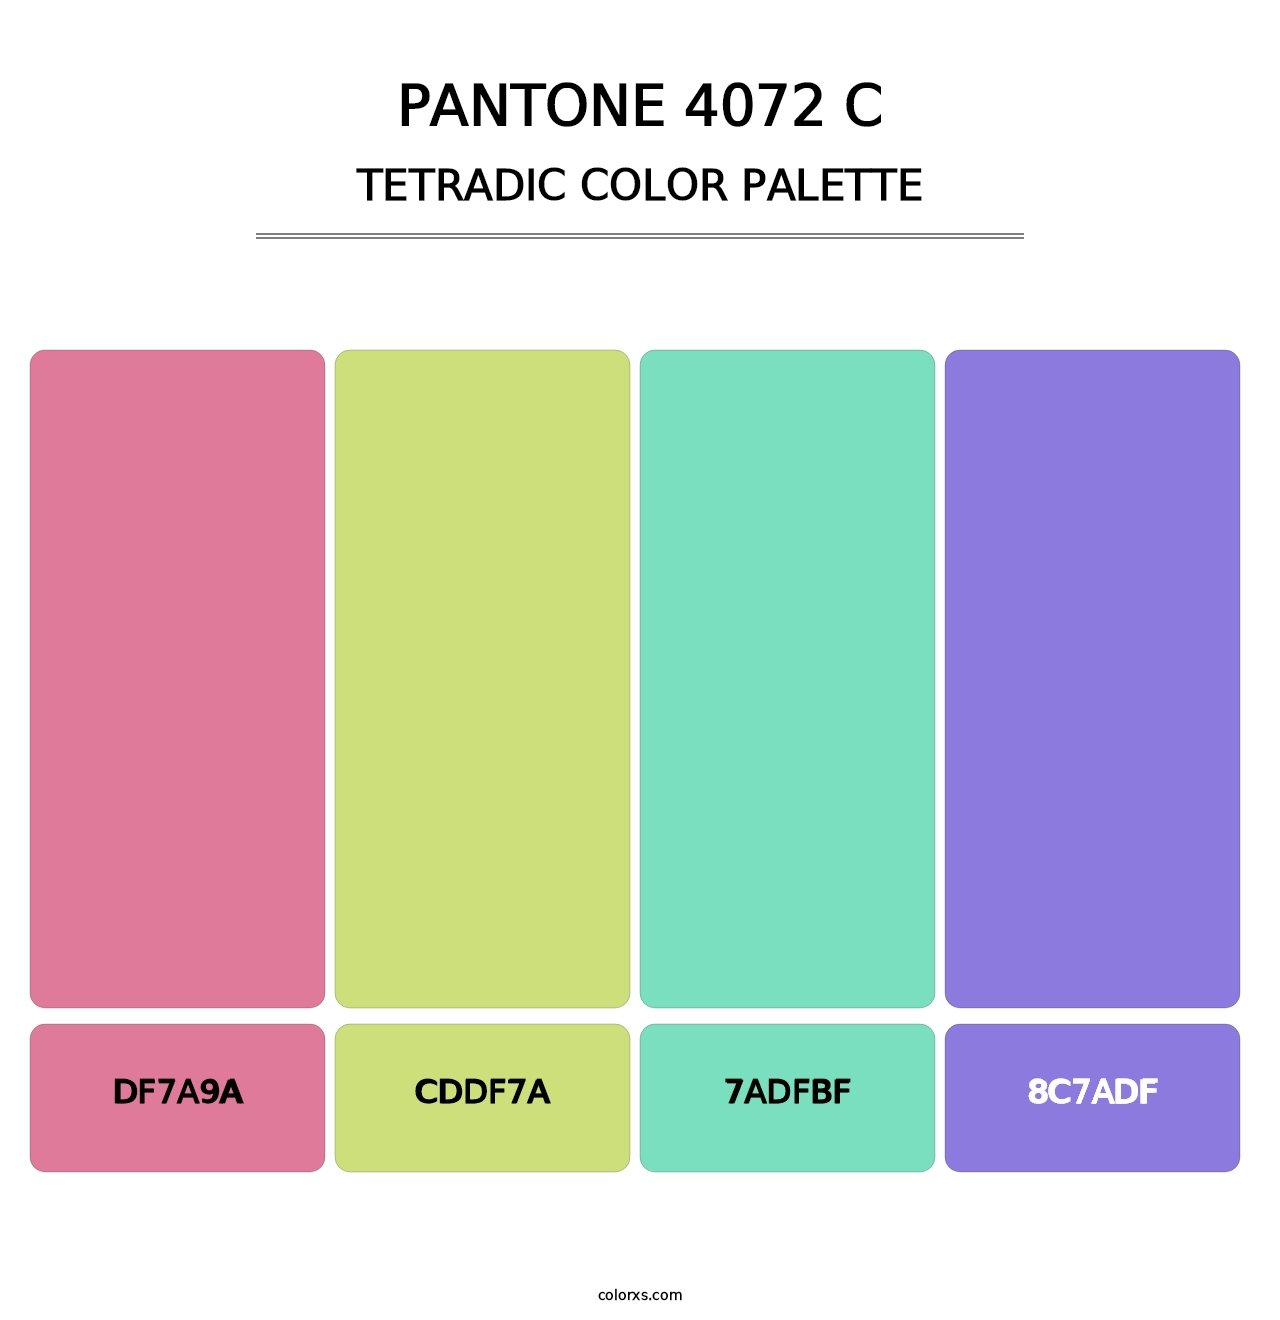 PANTONE 4072 C - Tetradic Color Palette